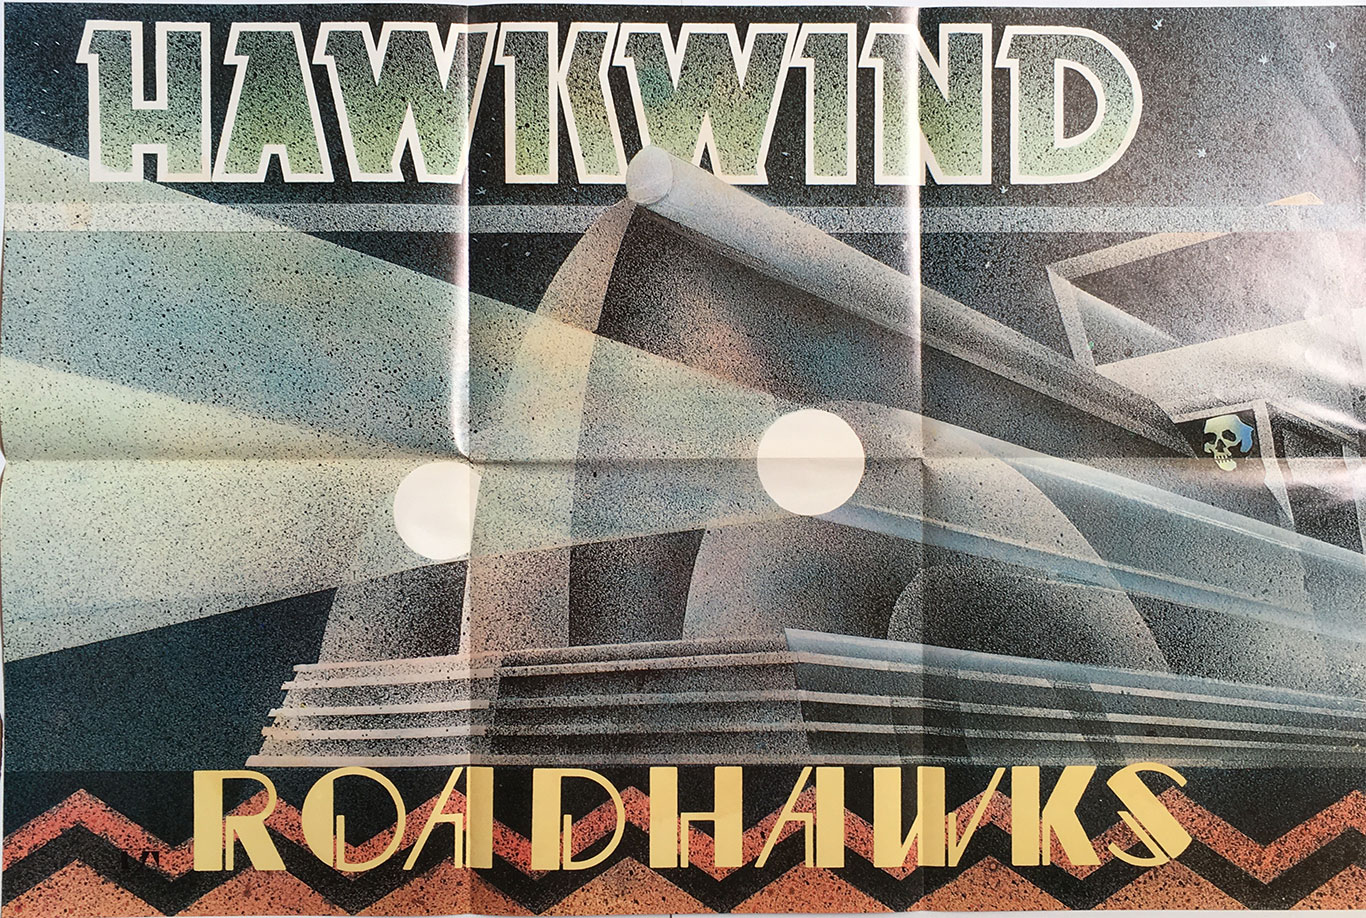 Hawkwind / Roadhawks Poster